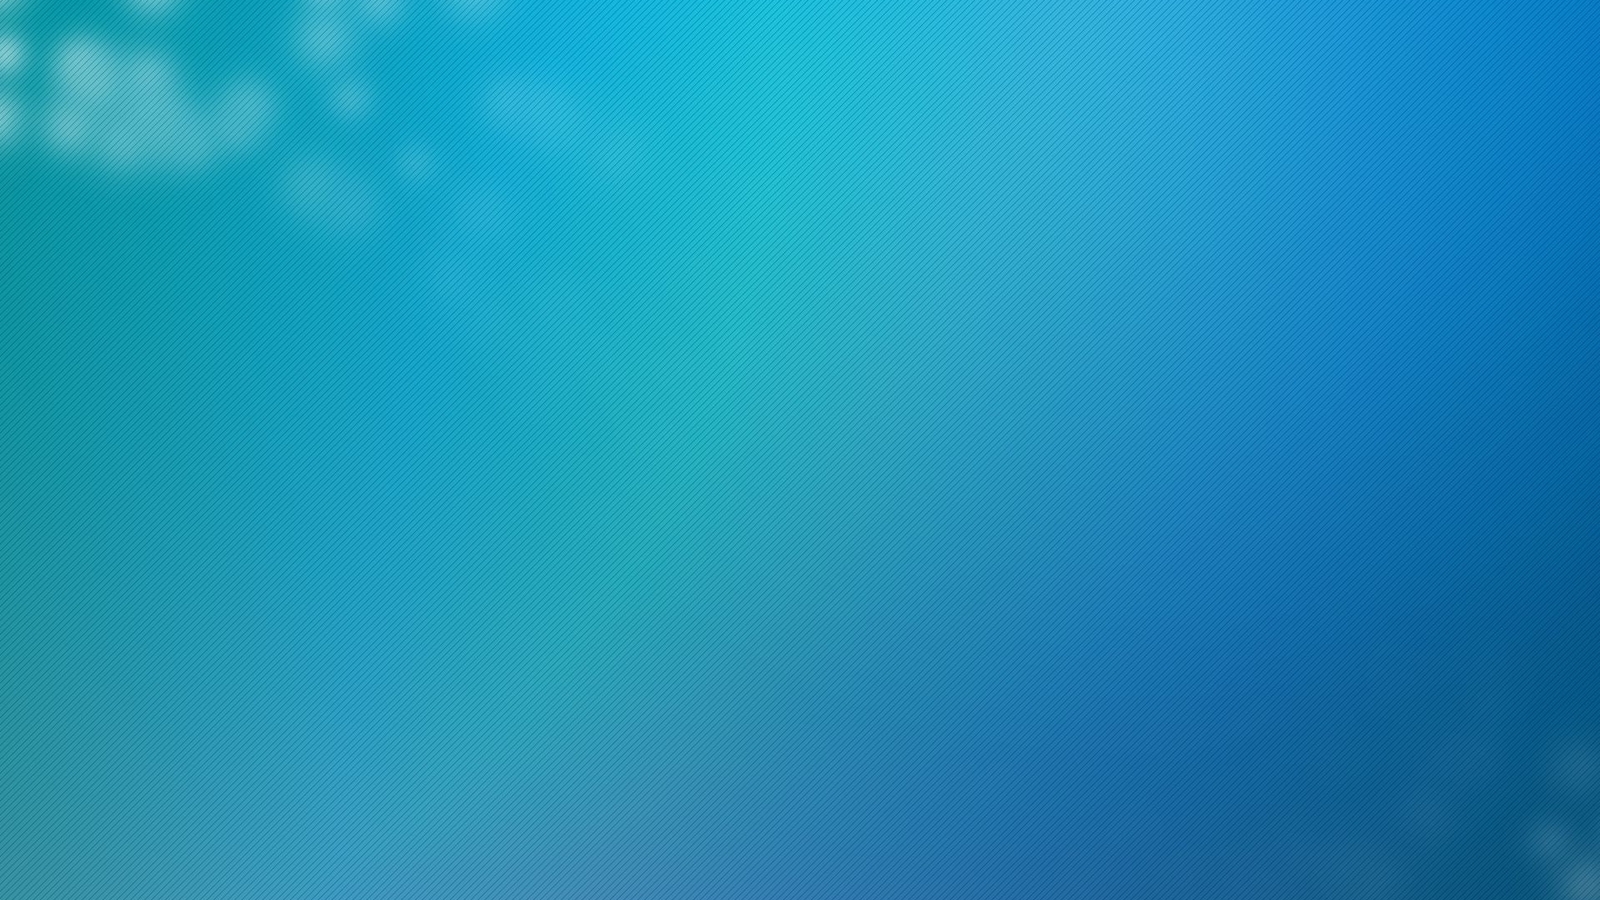 Image: Background, blue, lines, cloud